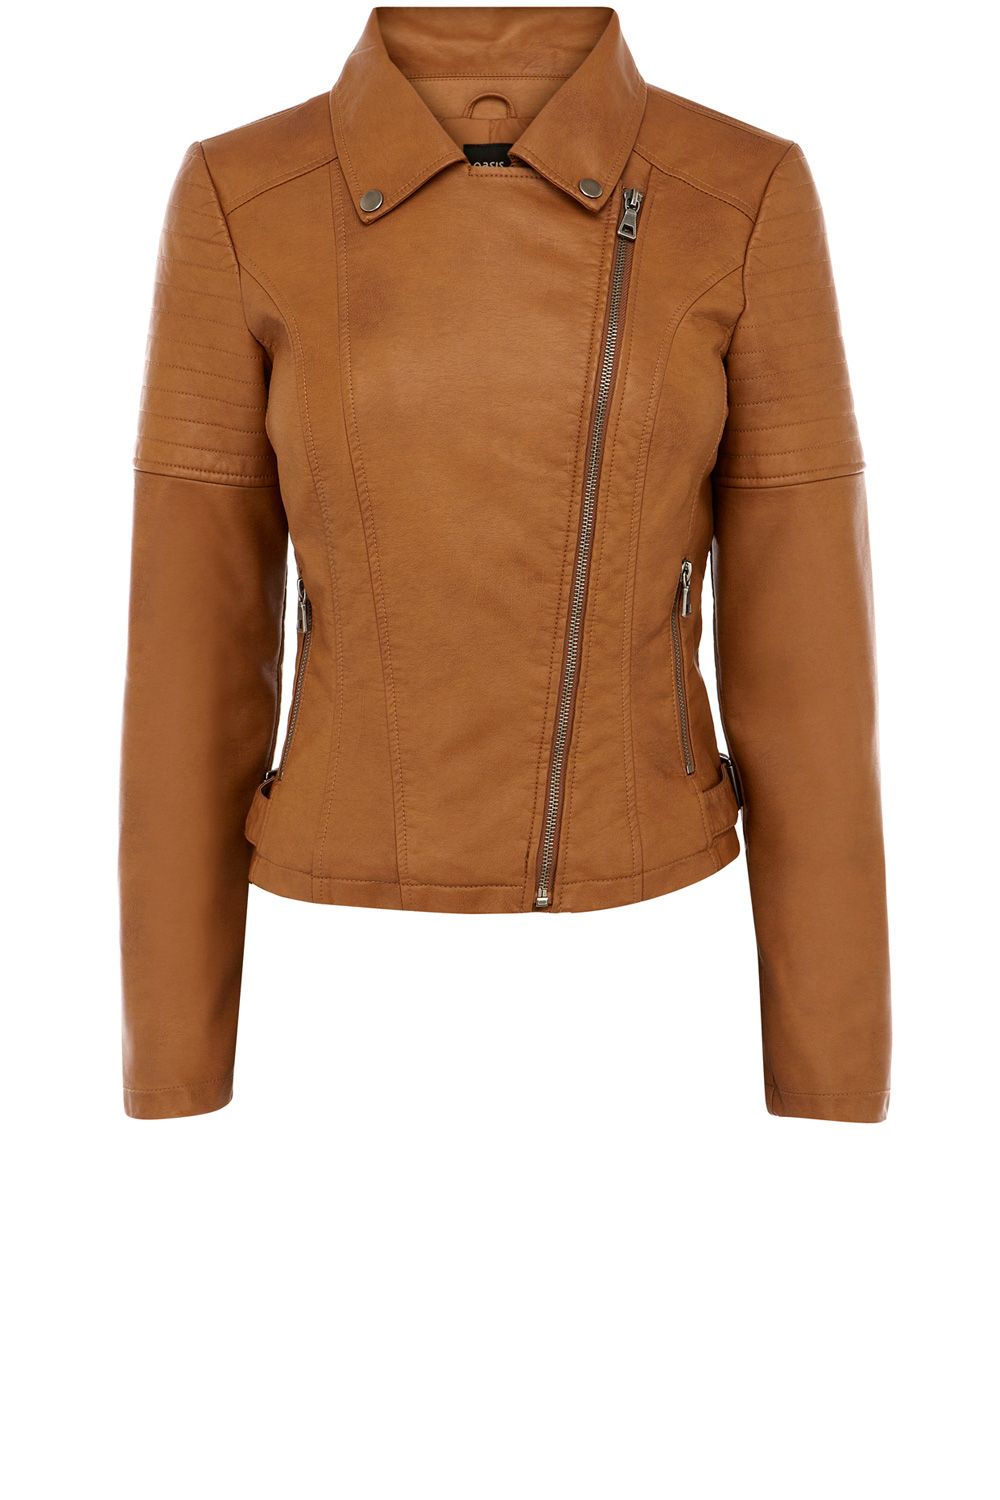 Oasis Becky Buckle Faux Leather Biker Jacket in Brown | Lyst